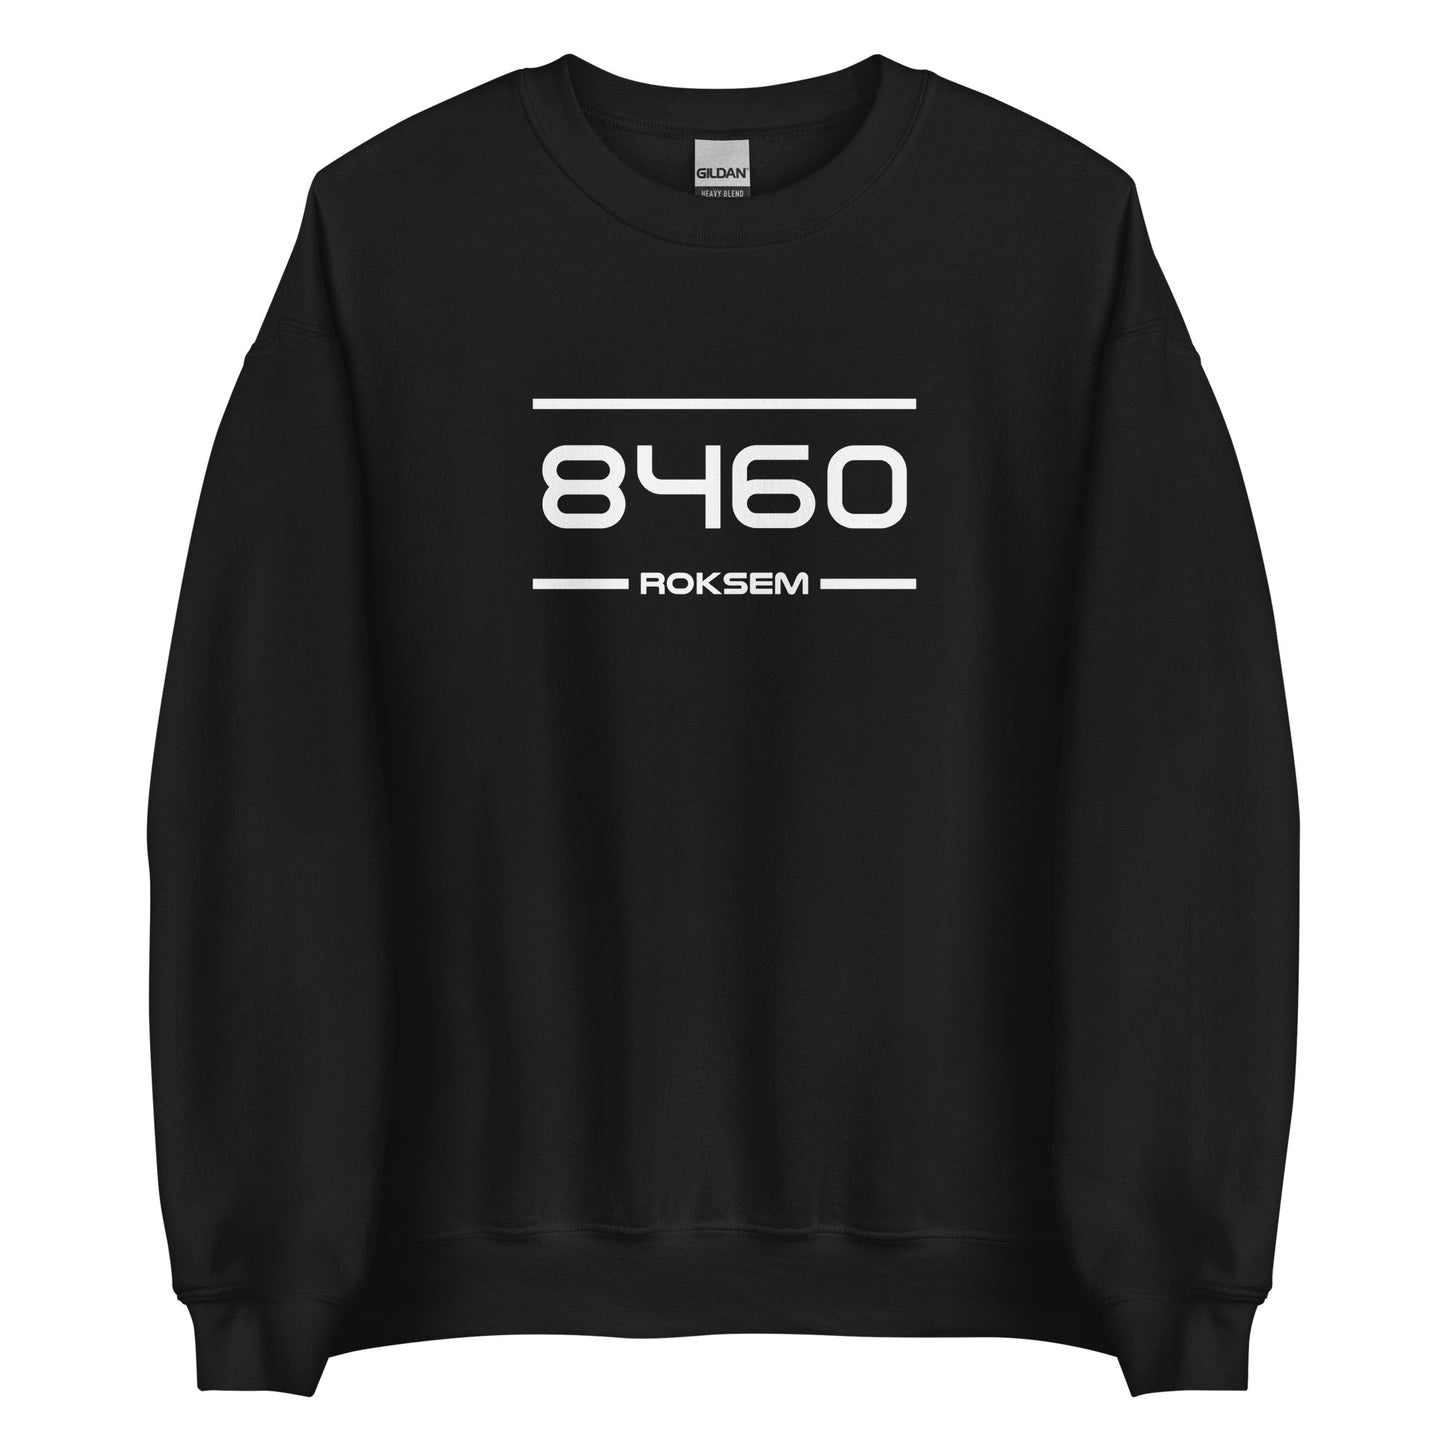 Sweater - 8460 - Roksem (M/V)